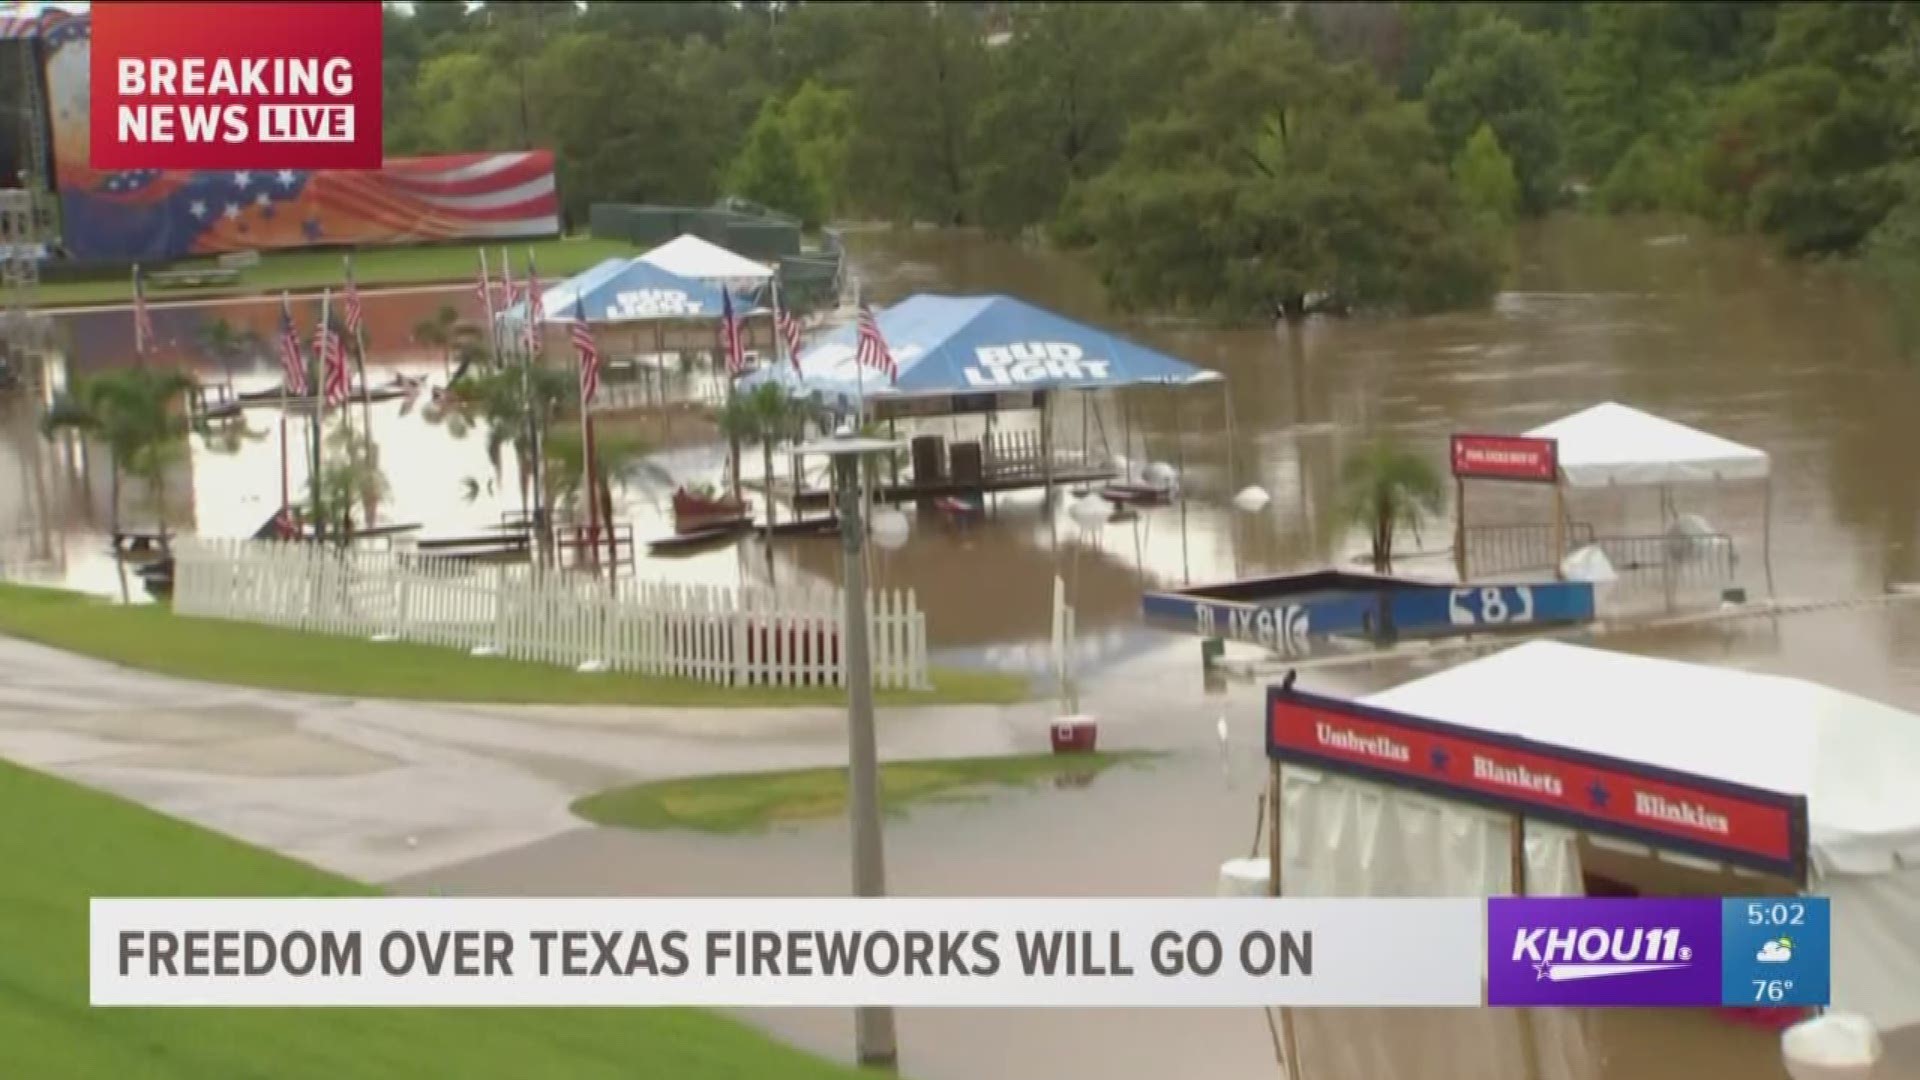 Despite flooding, Freedom Over Texas fireworks will still go on.